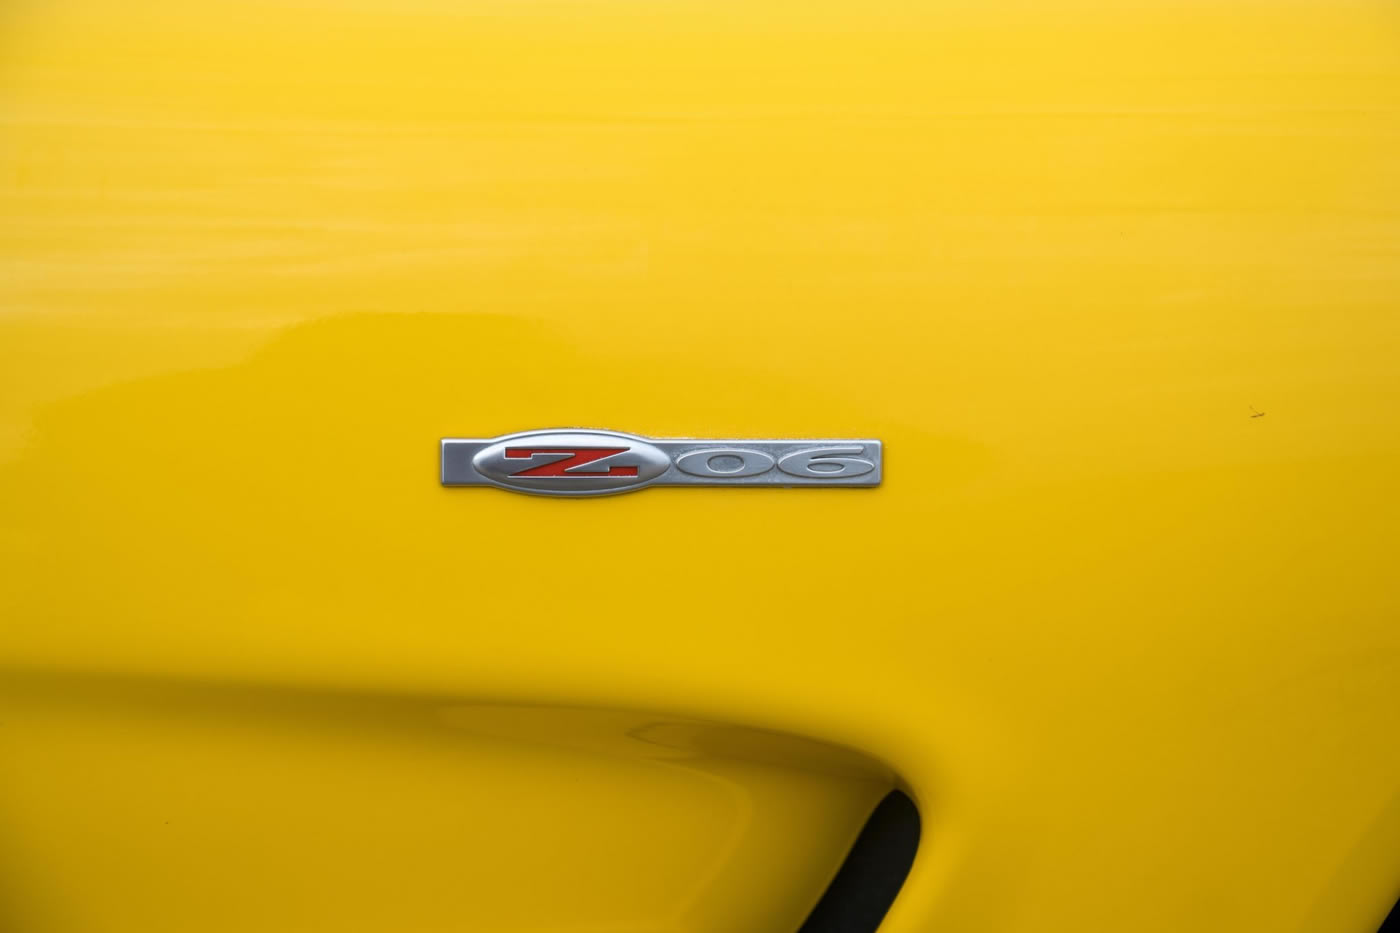 2001 Corvette Z06 in Millennium Yellow